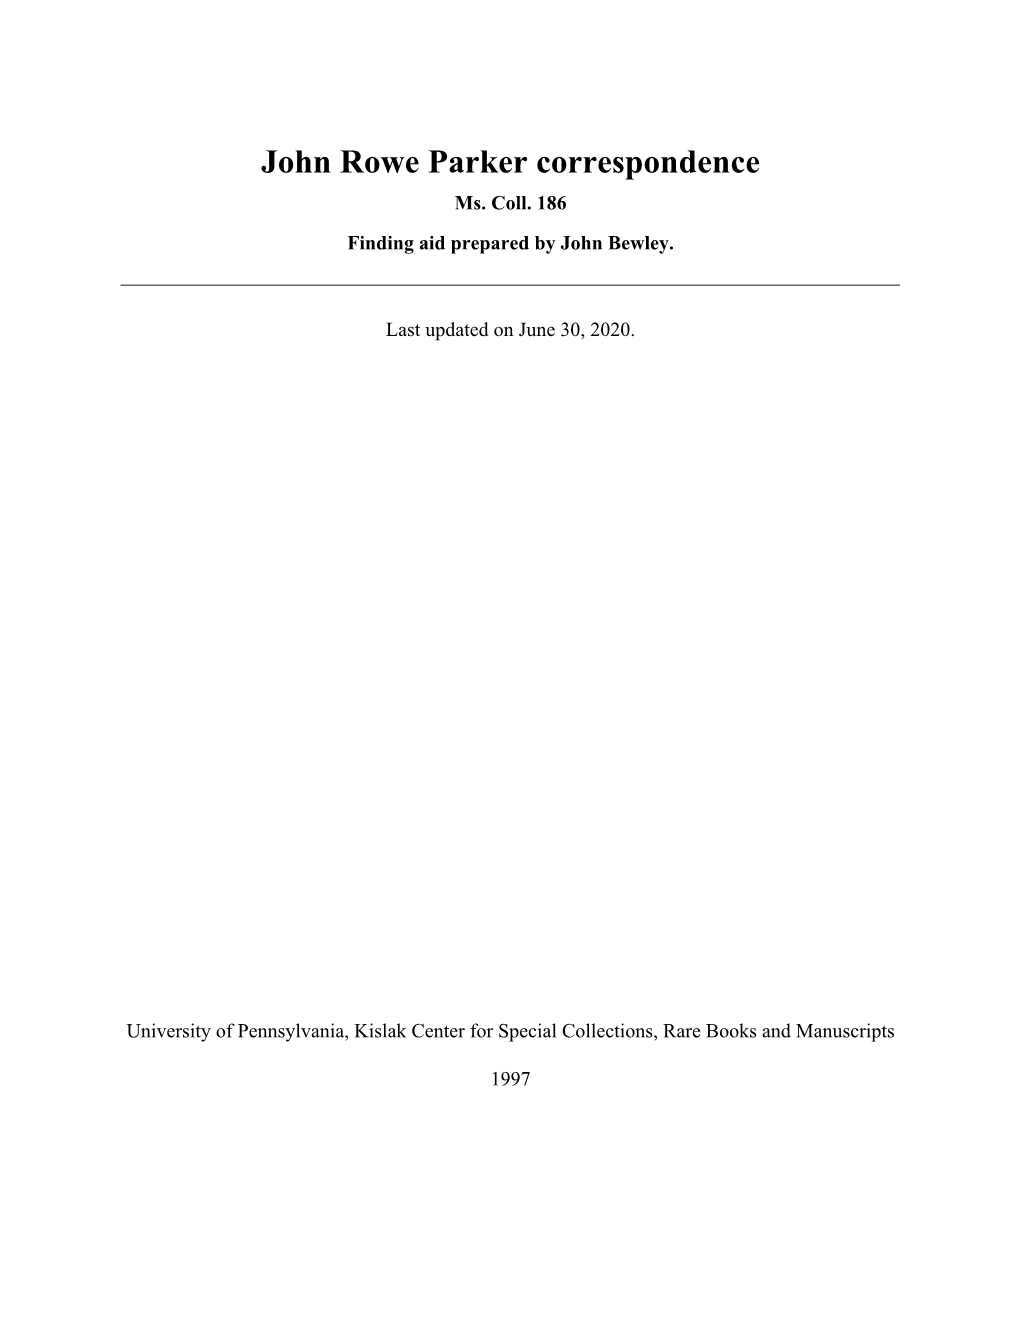 John Rowe Parker Correspondence Ms